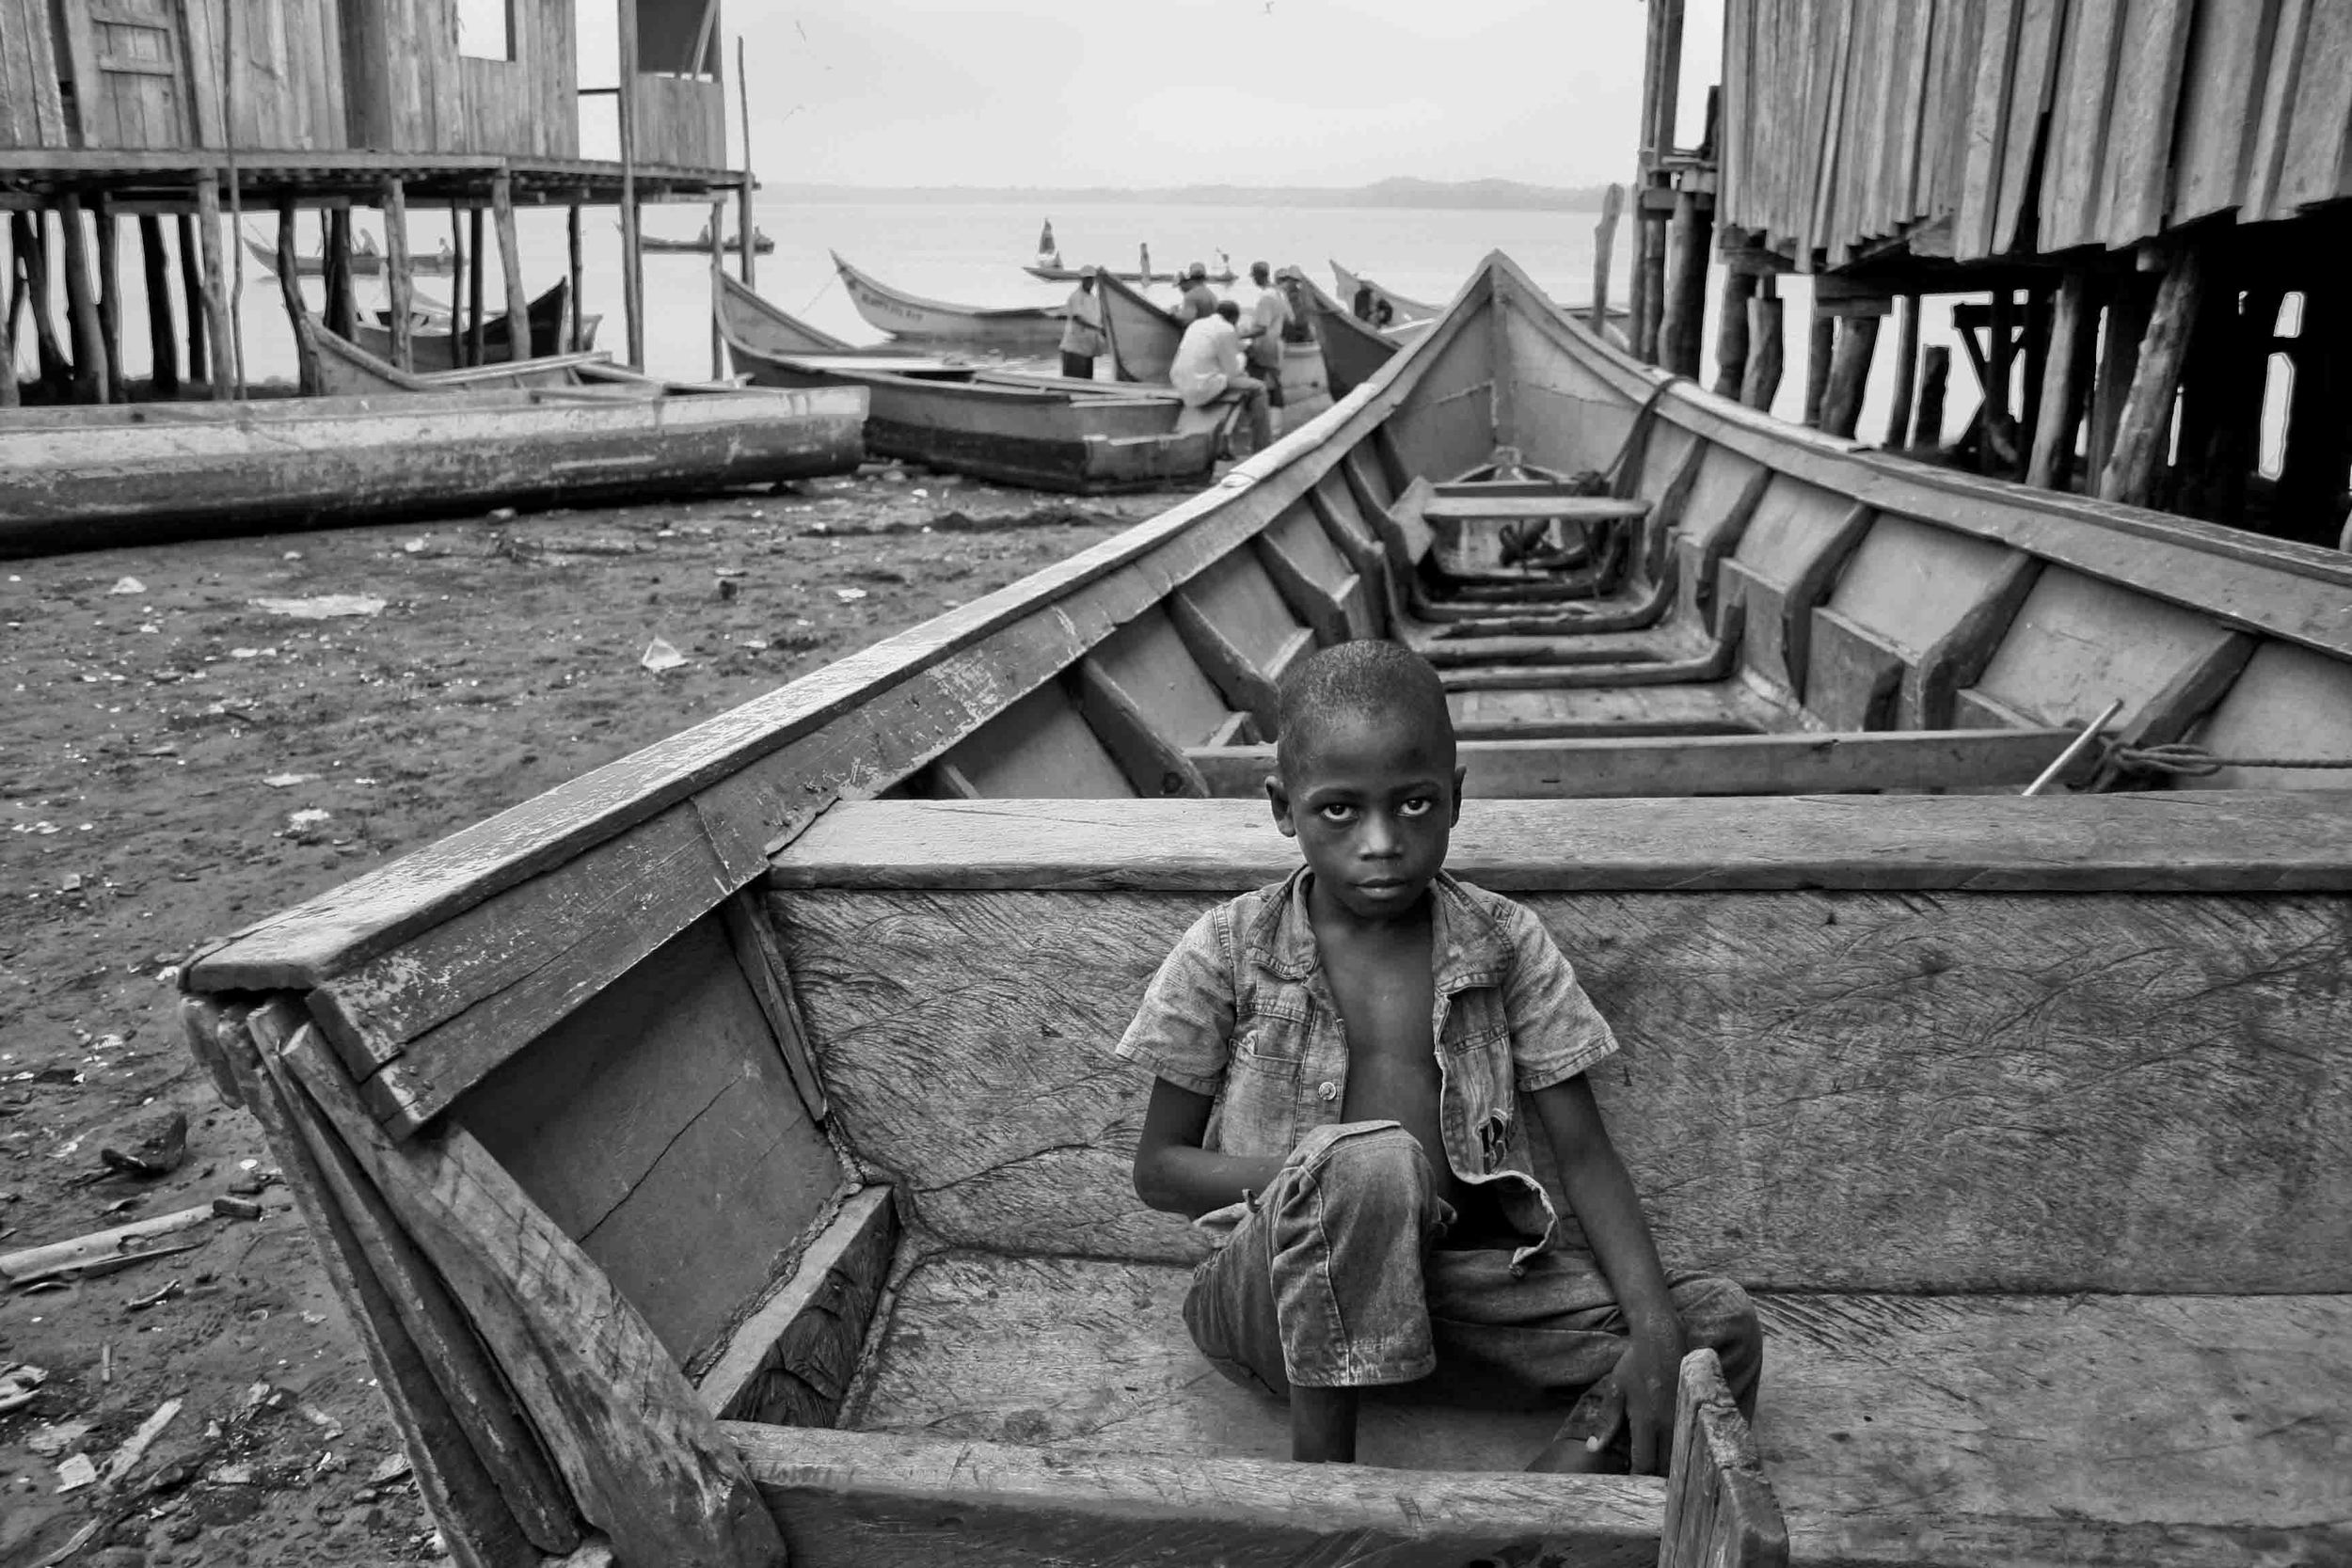  A child sitting on a boat looks at the camera. Pampanal de Bolívar, Ecuador. 2010. 